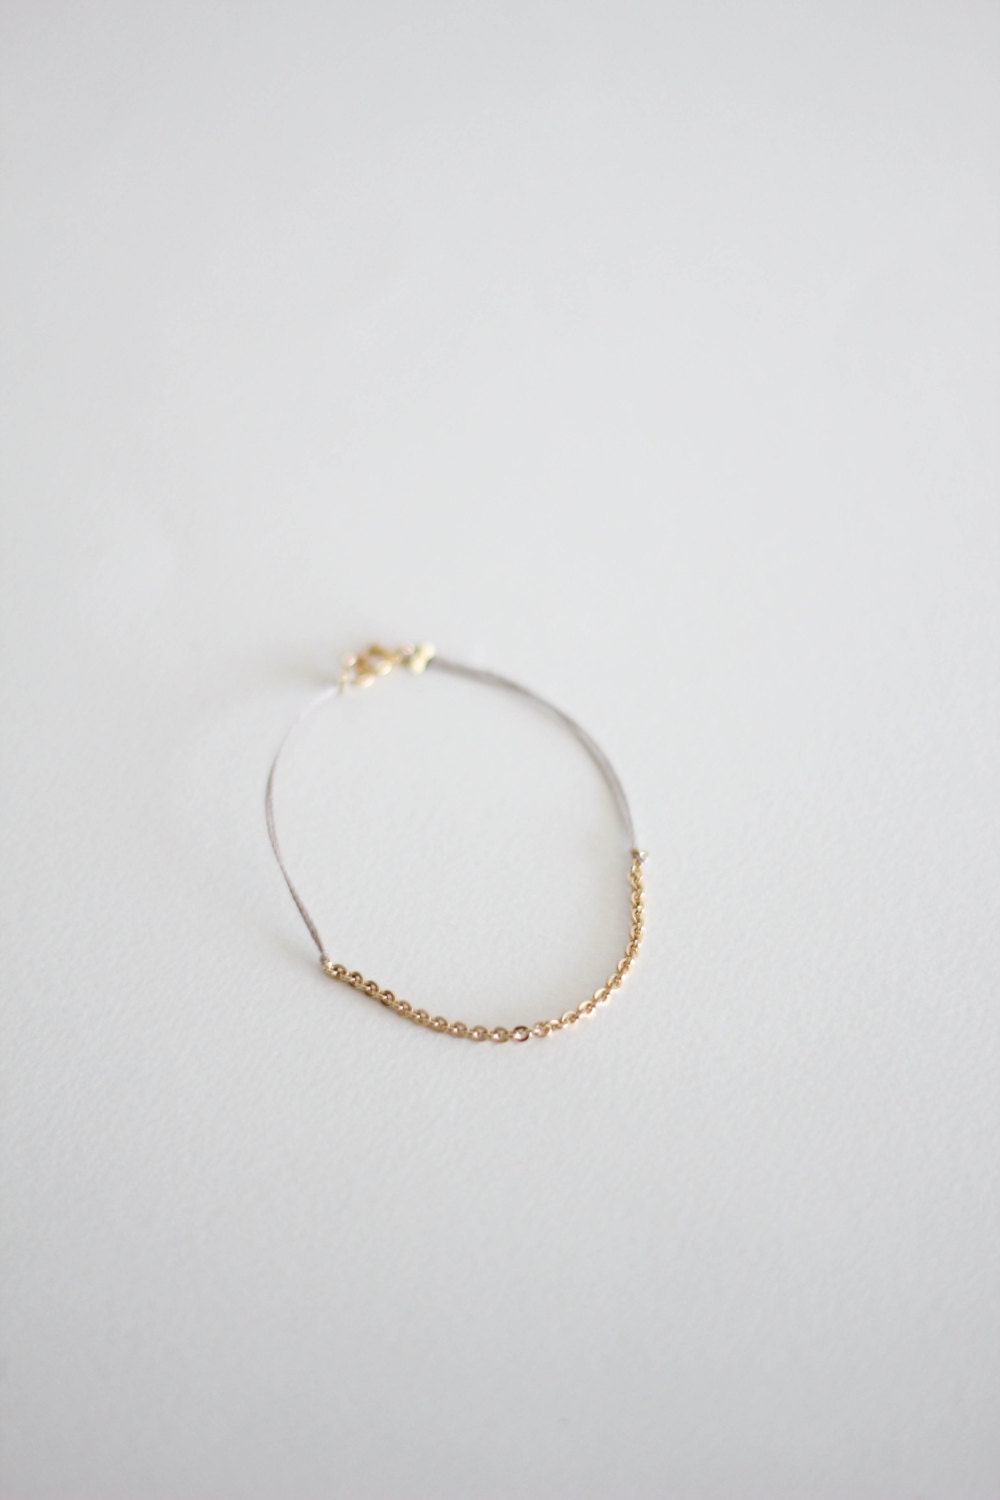 Buy Gold Star Bracelet,Women's 14K Gold Plated Tiny Stars Chain Bracelets  at Amazon.in